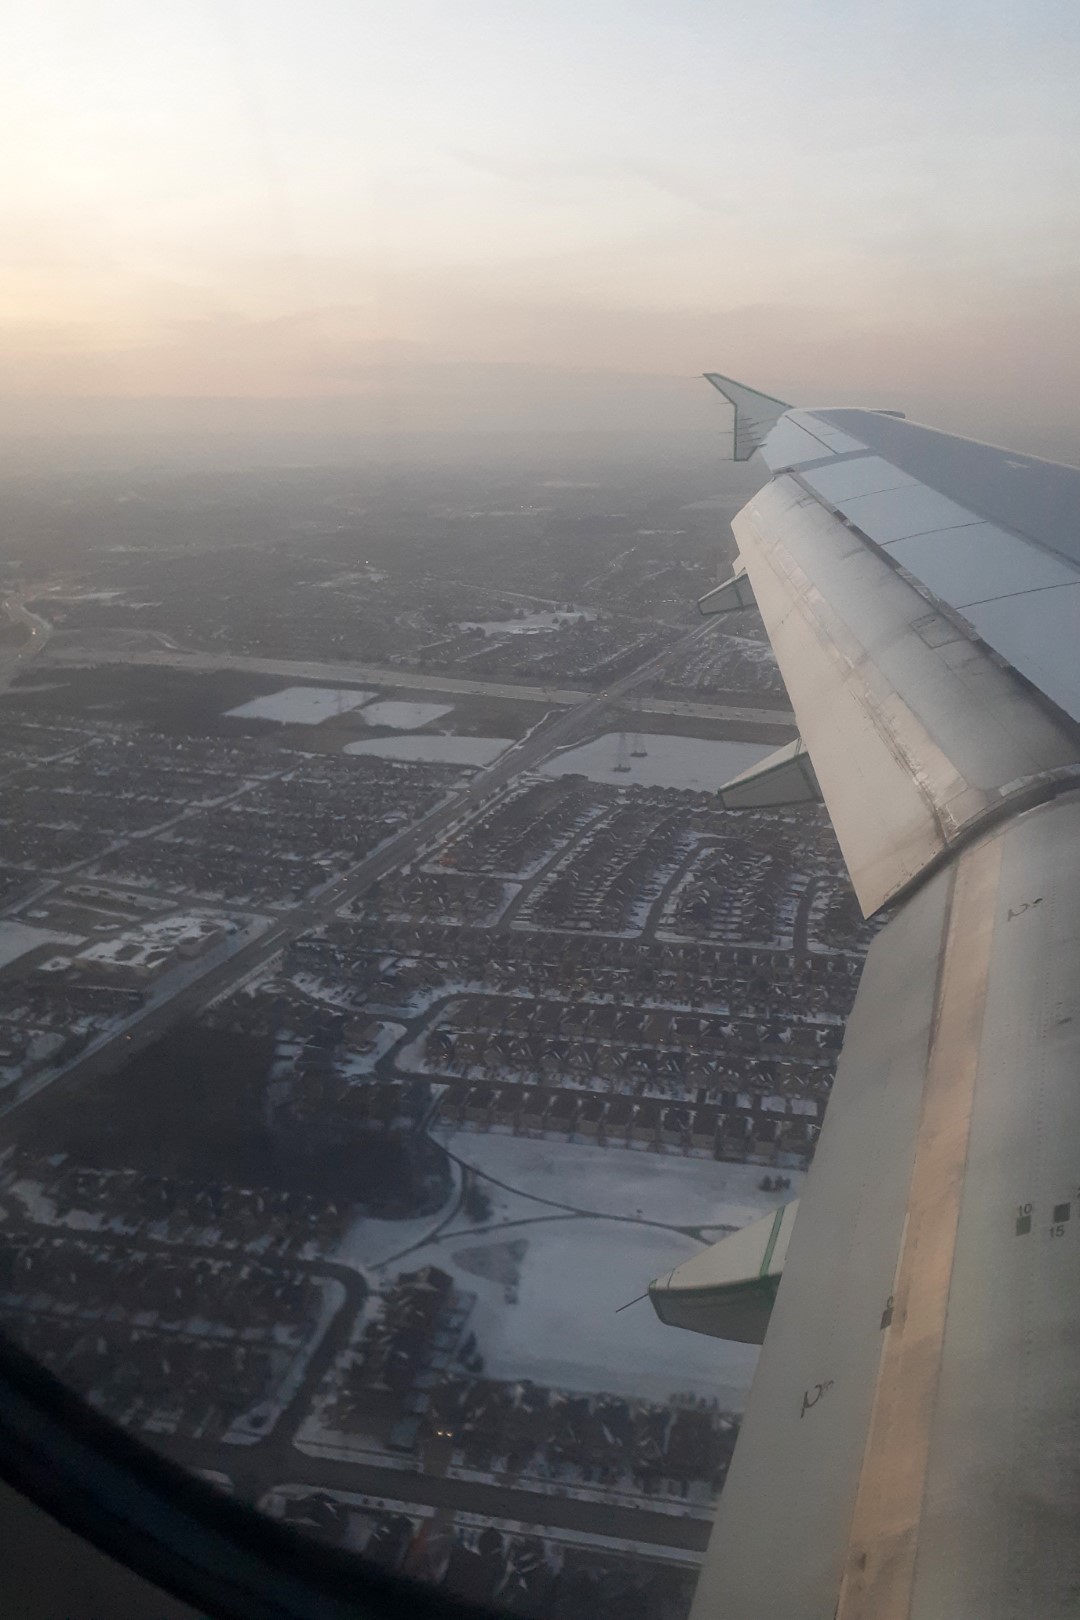 Landing in Toronto, December 17, 2020